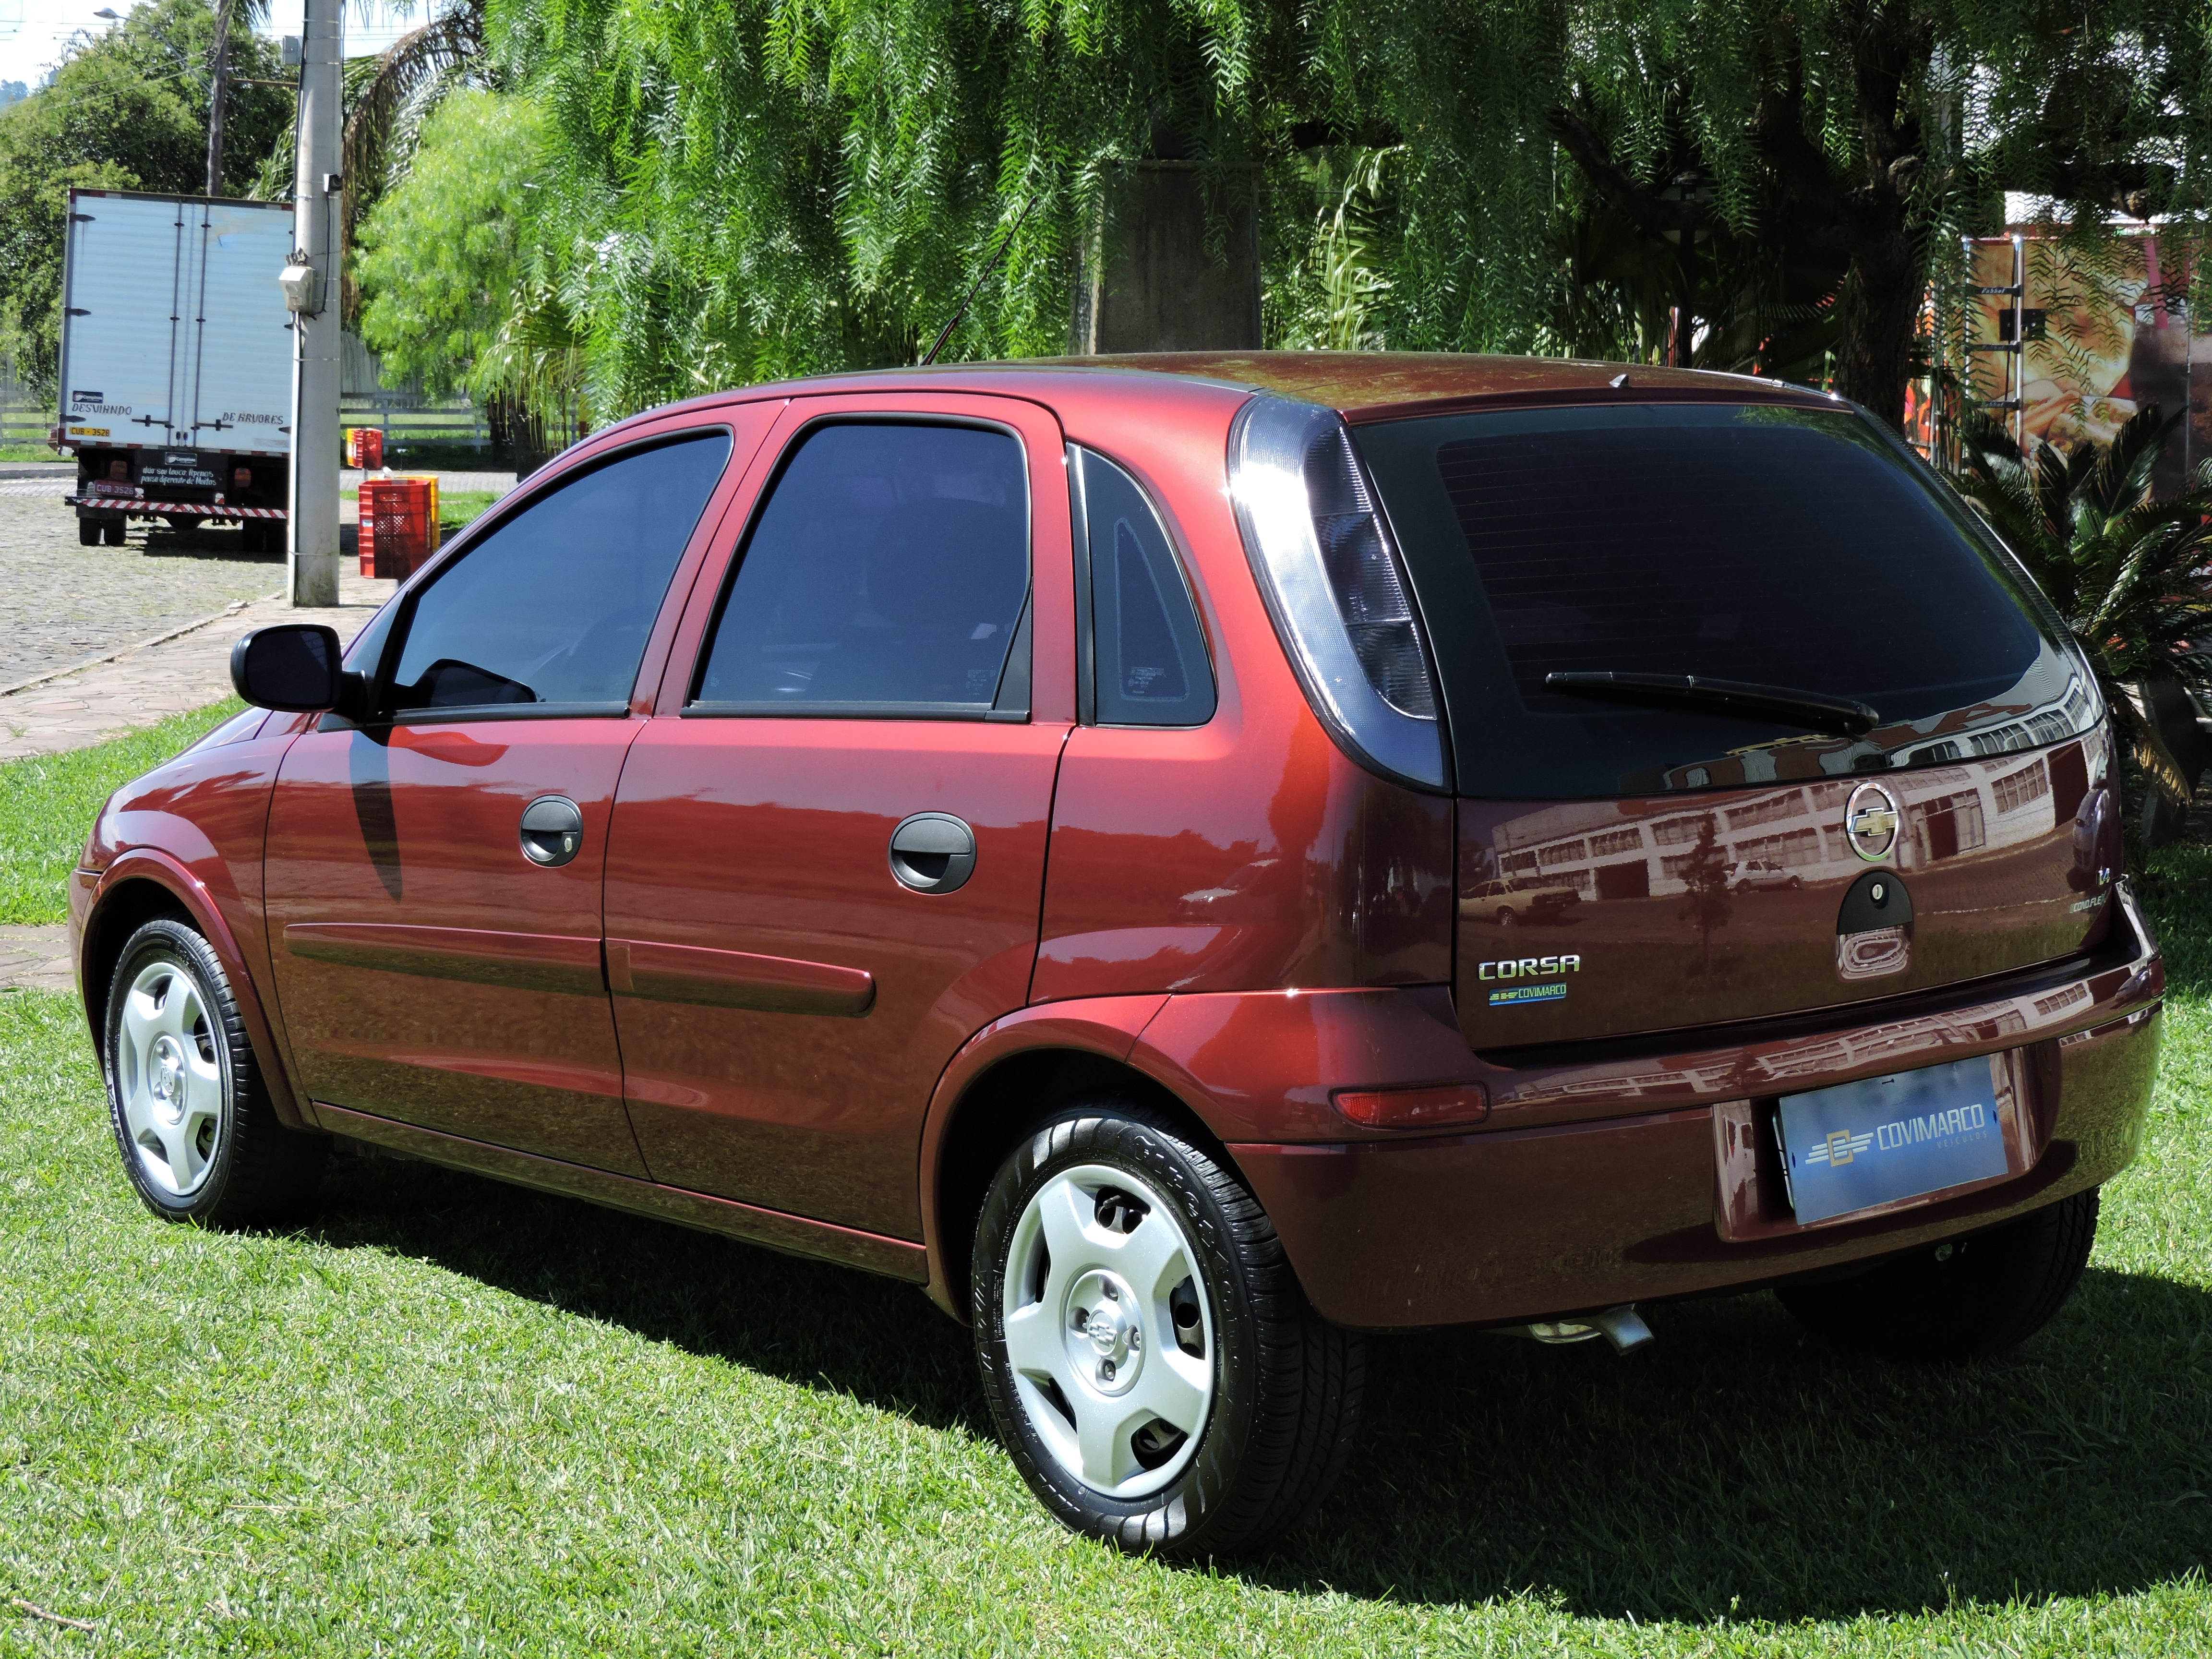 Chevrolet Corsa Hatch Maxx, ano 2011, modelo 2012, bege (17490)